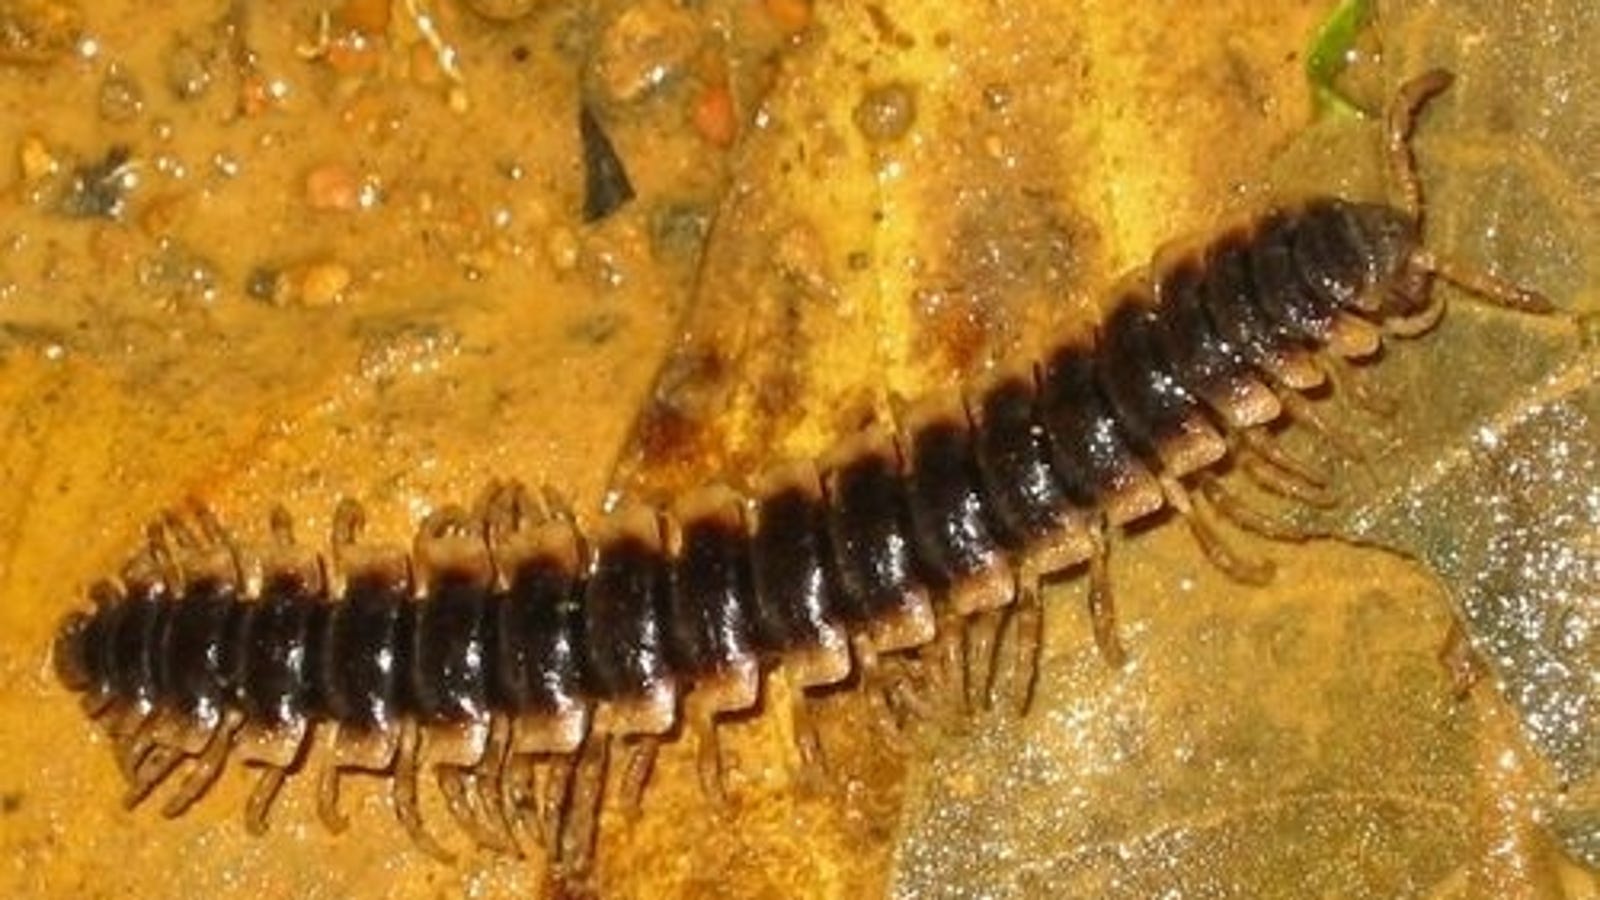 Meet your true ancestor: The segmented worm